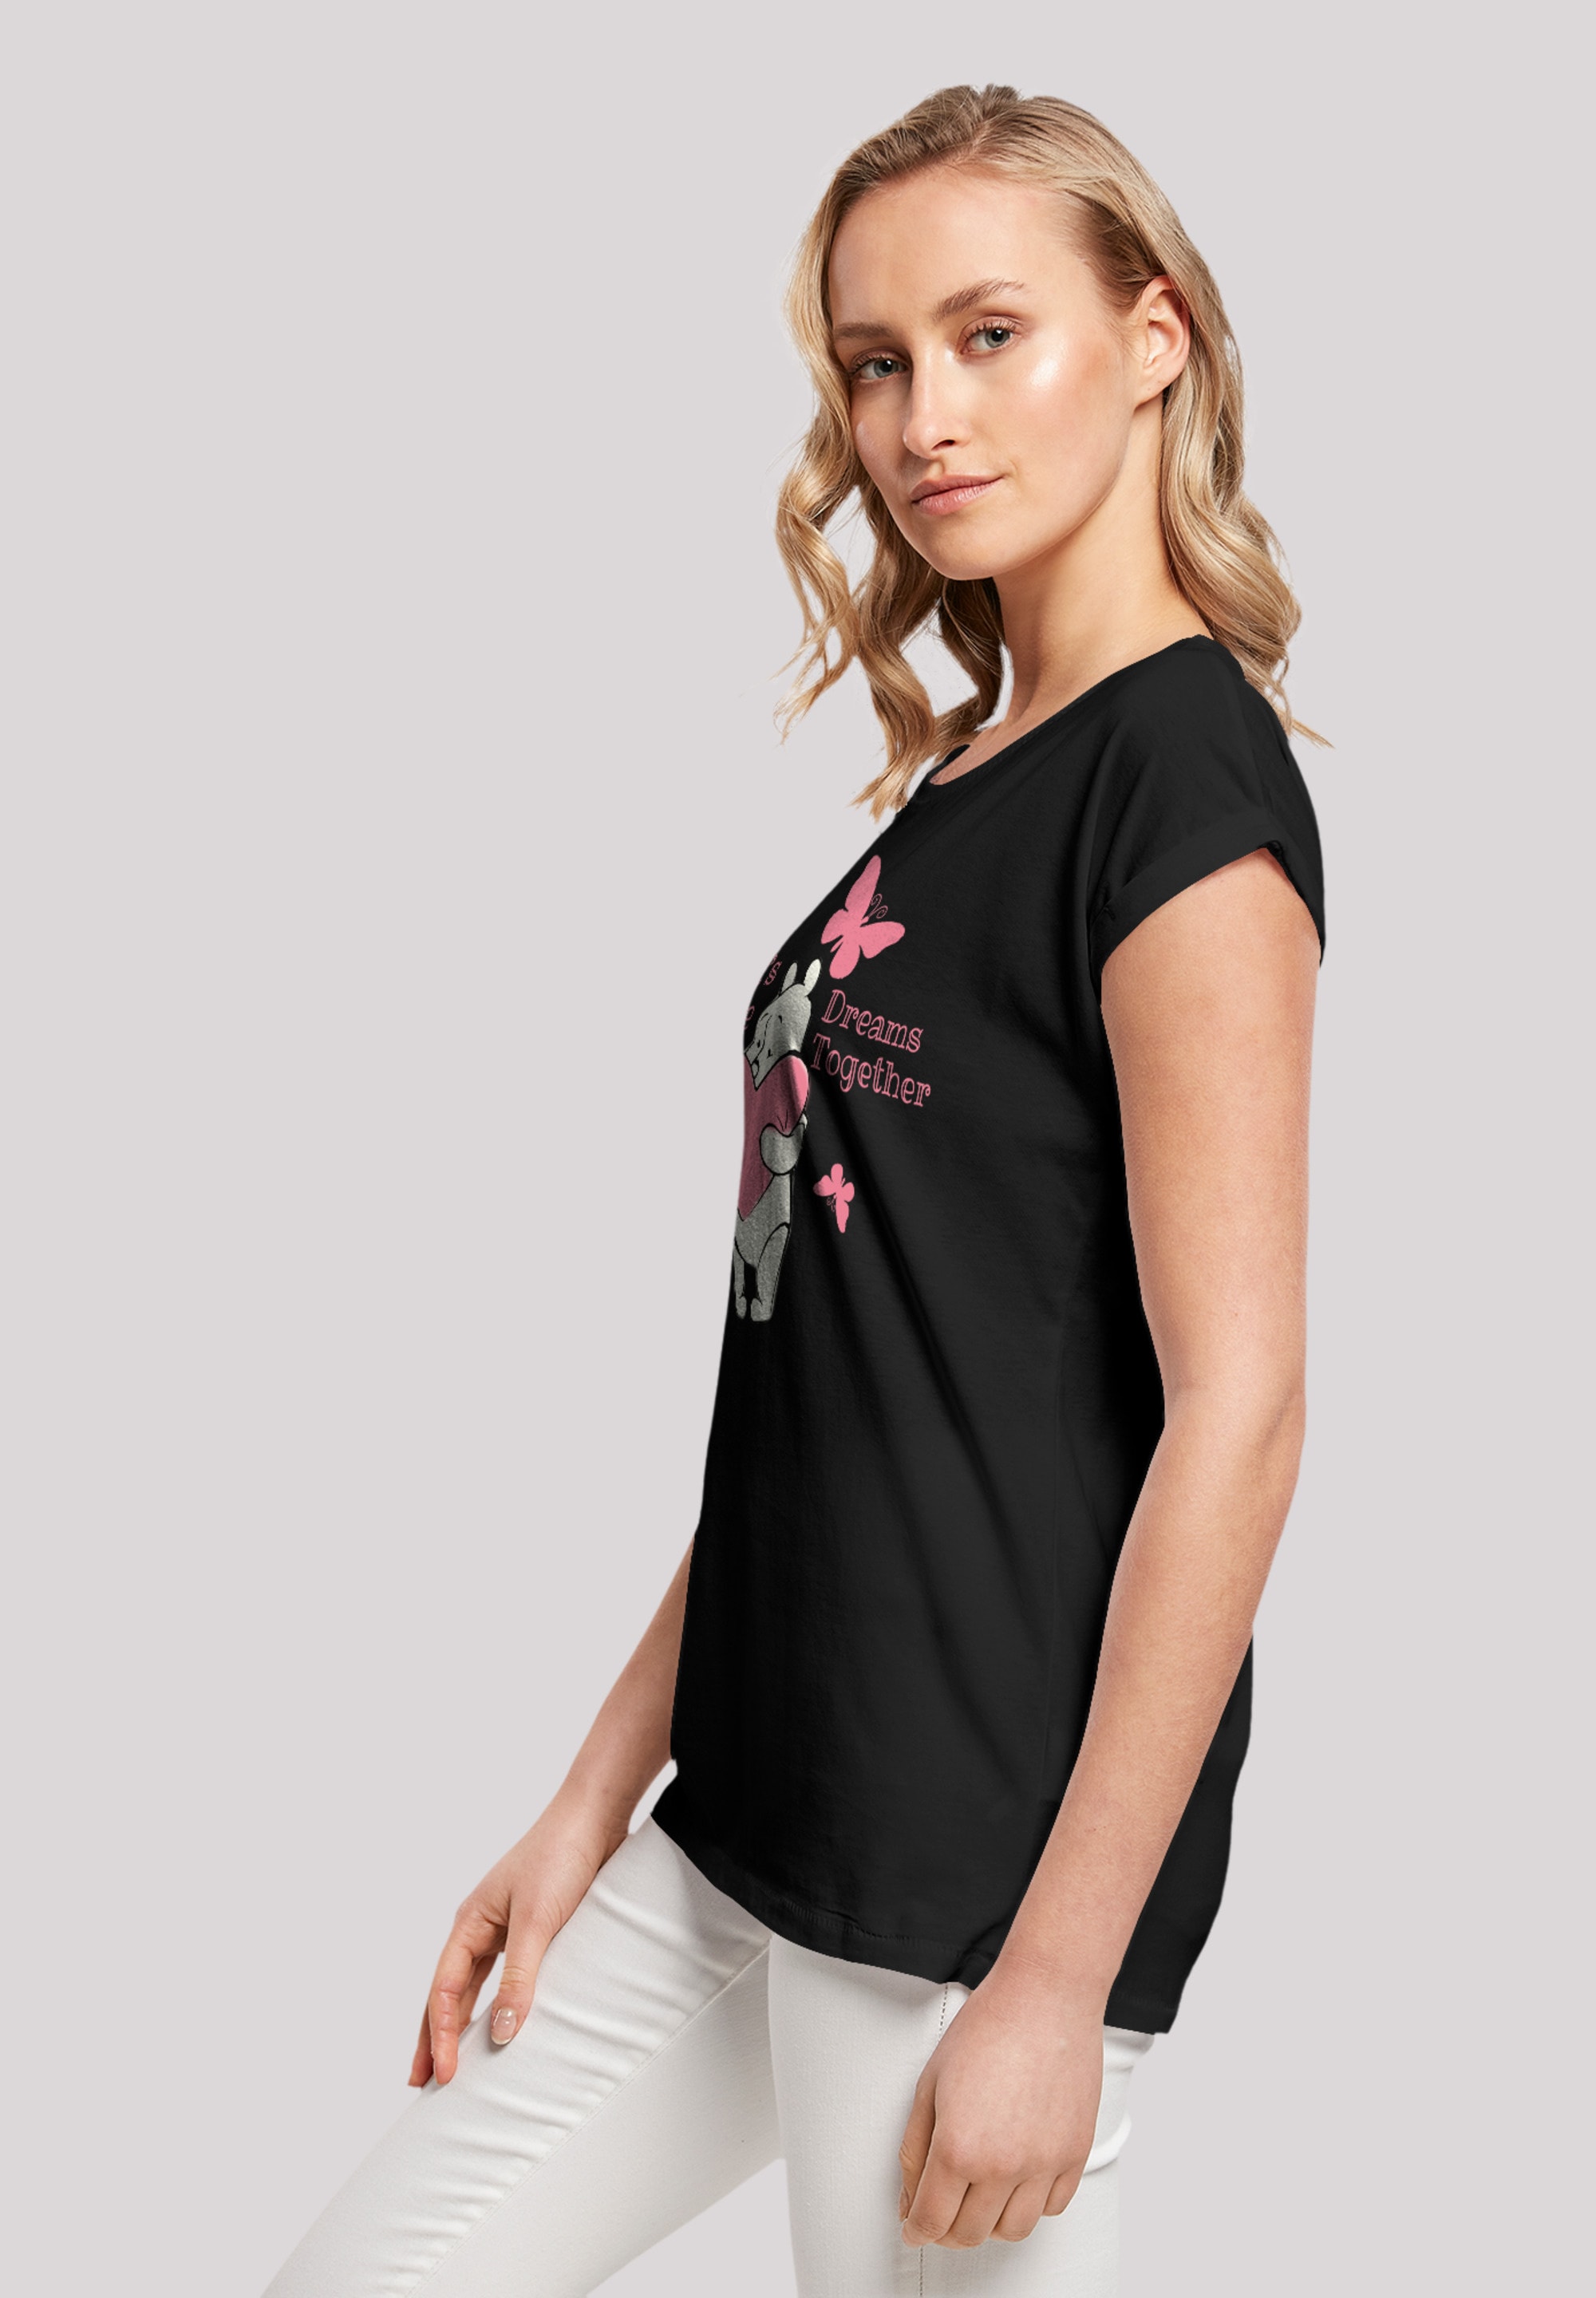 F4NT4STIC T-Shirt »Disney Winnie Puuh Let\'s Make Dreams«, Premium Qualität  bestellen